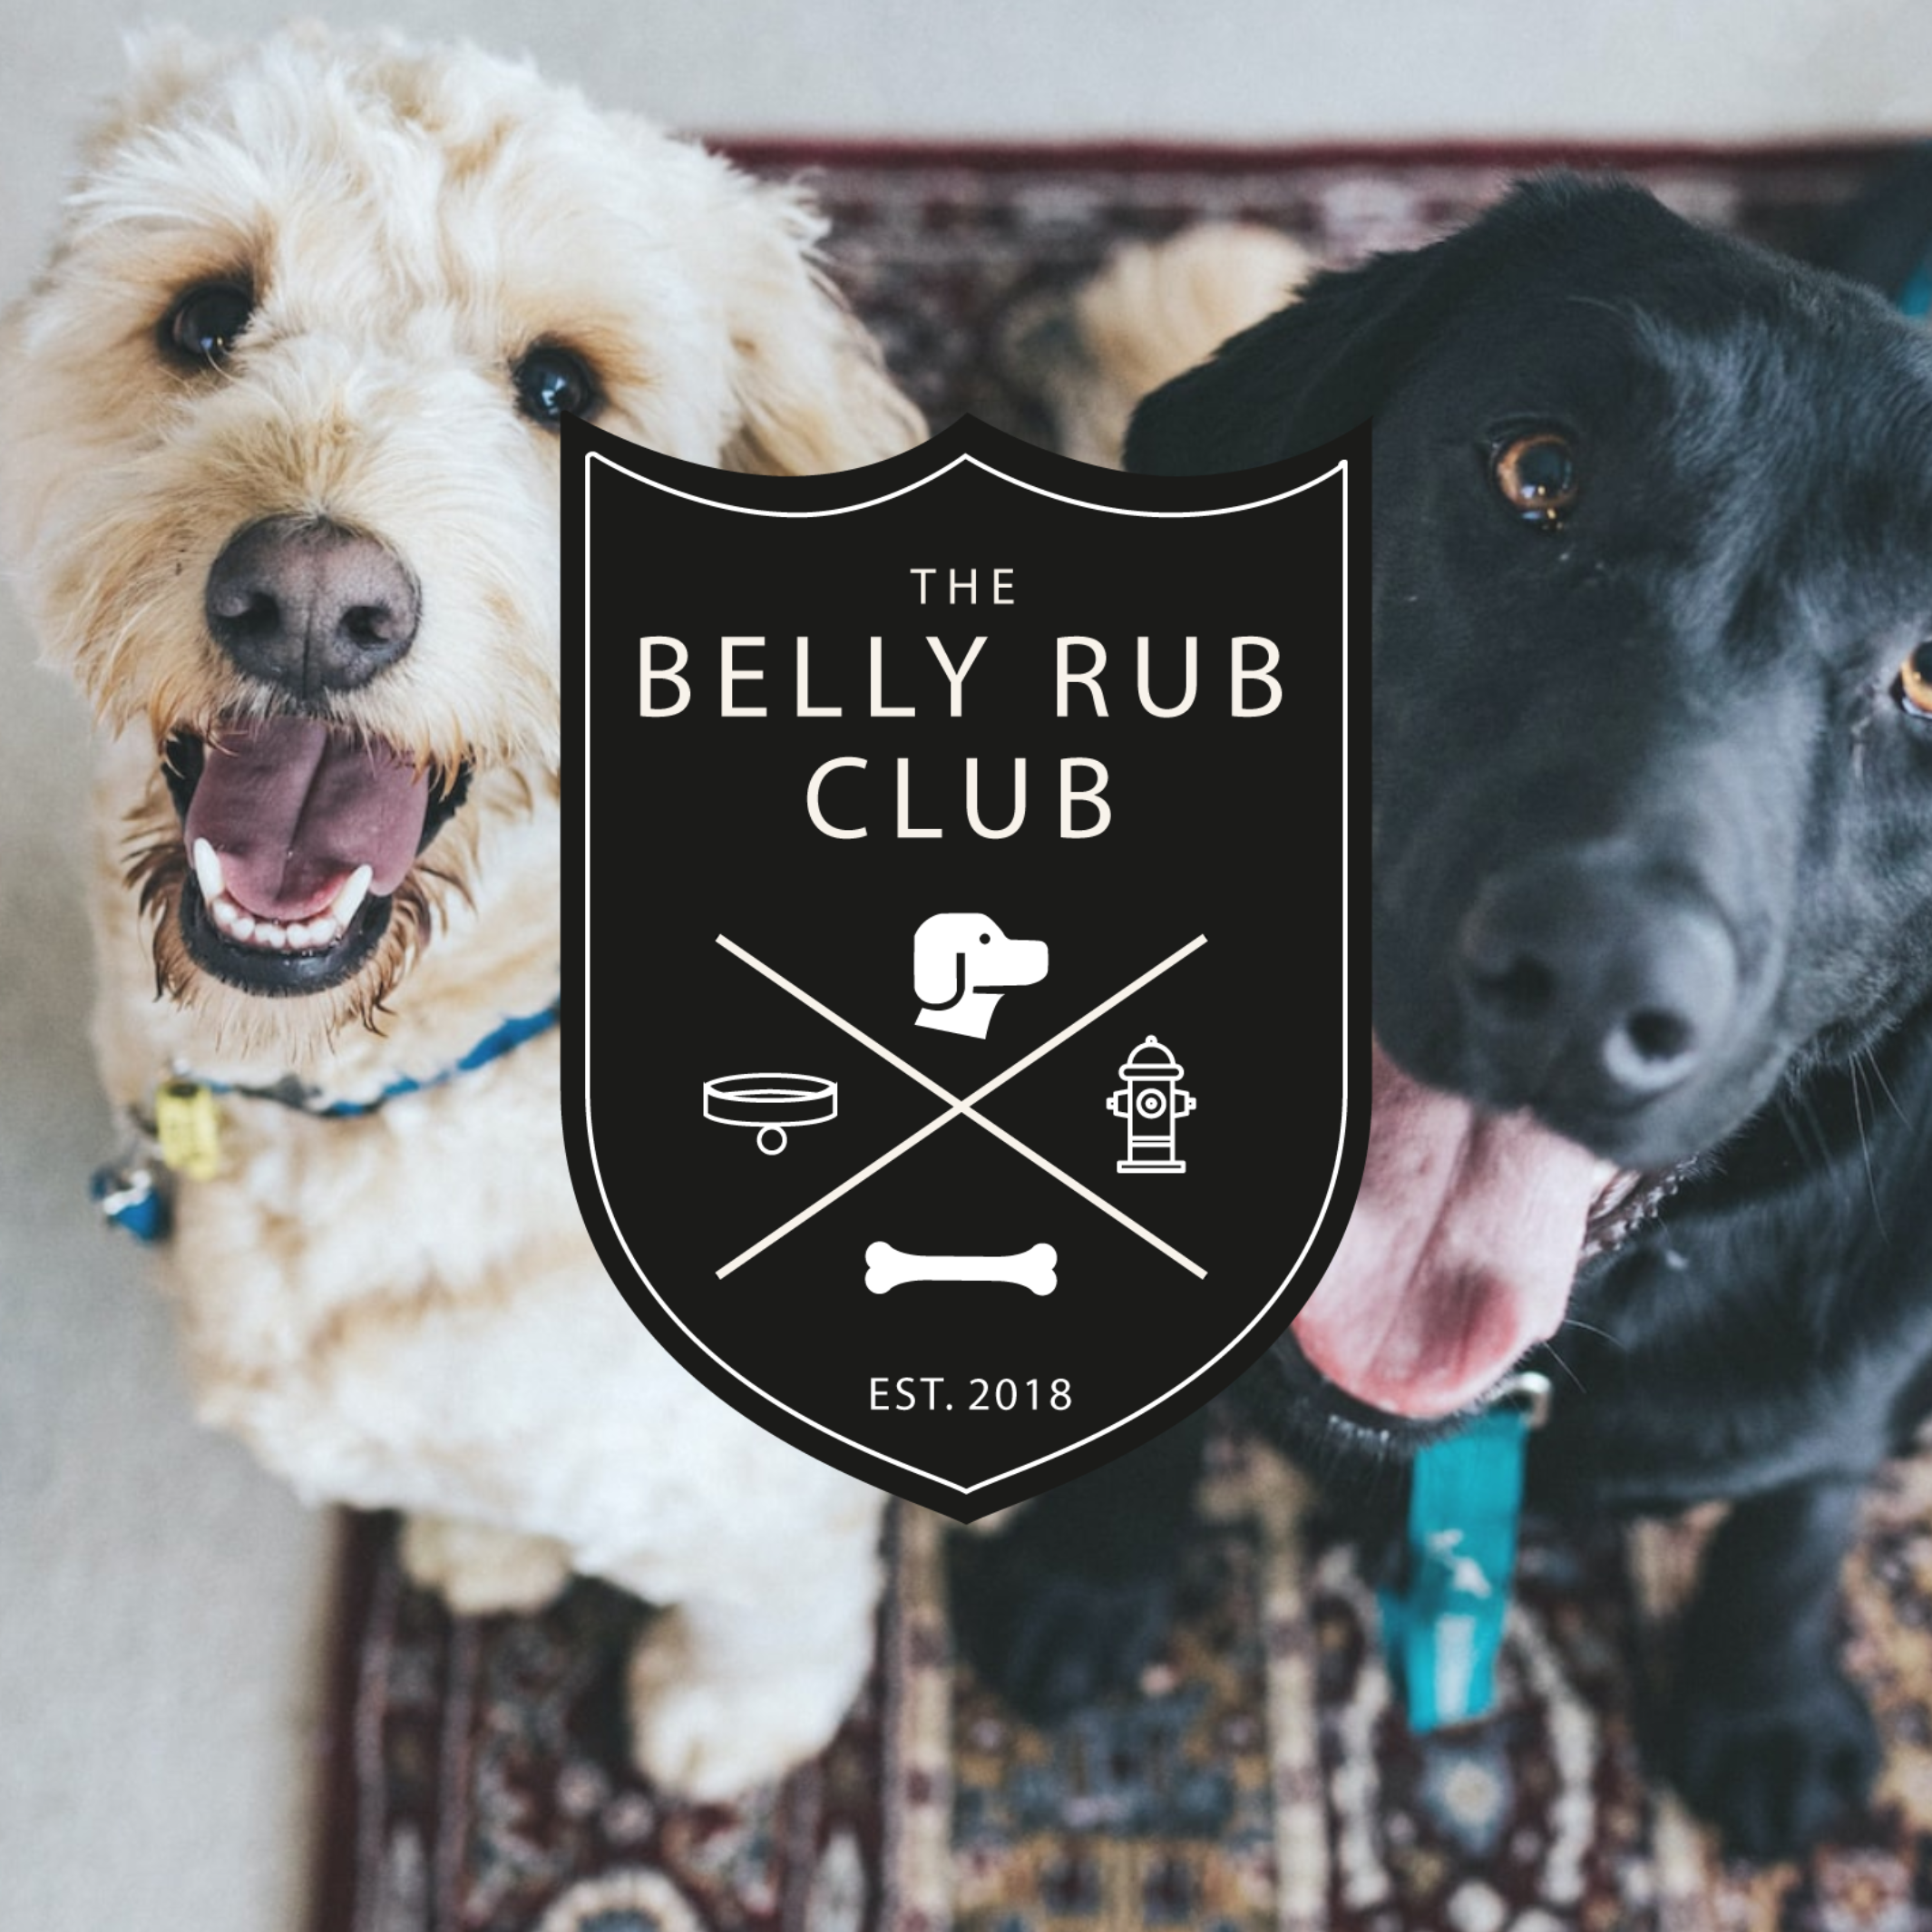 The Belly Rub Club logo feature